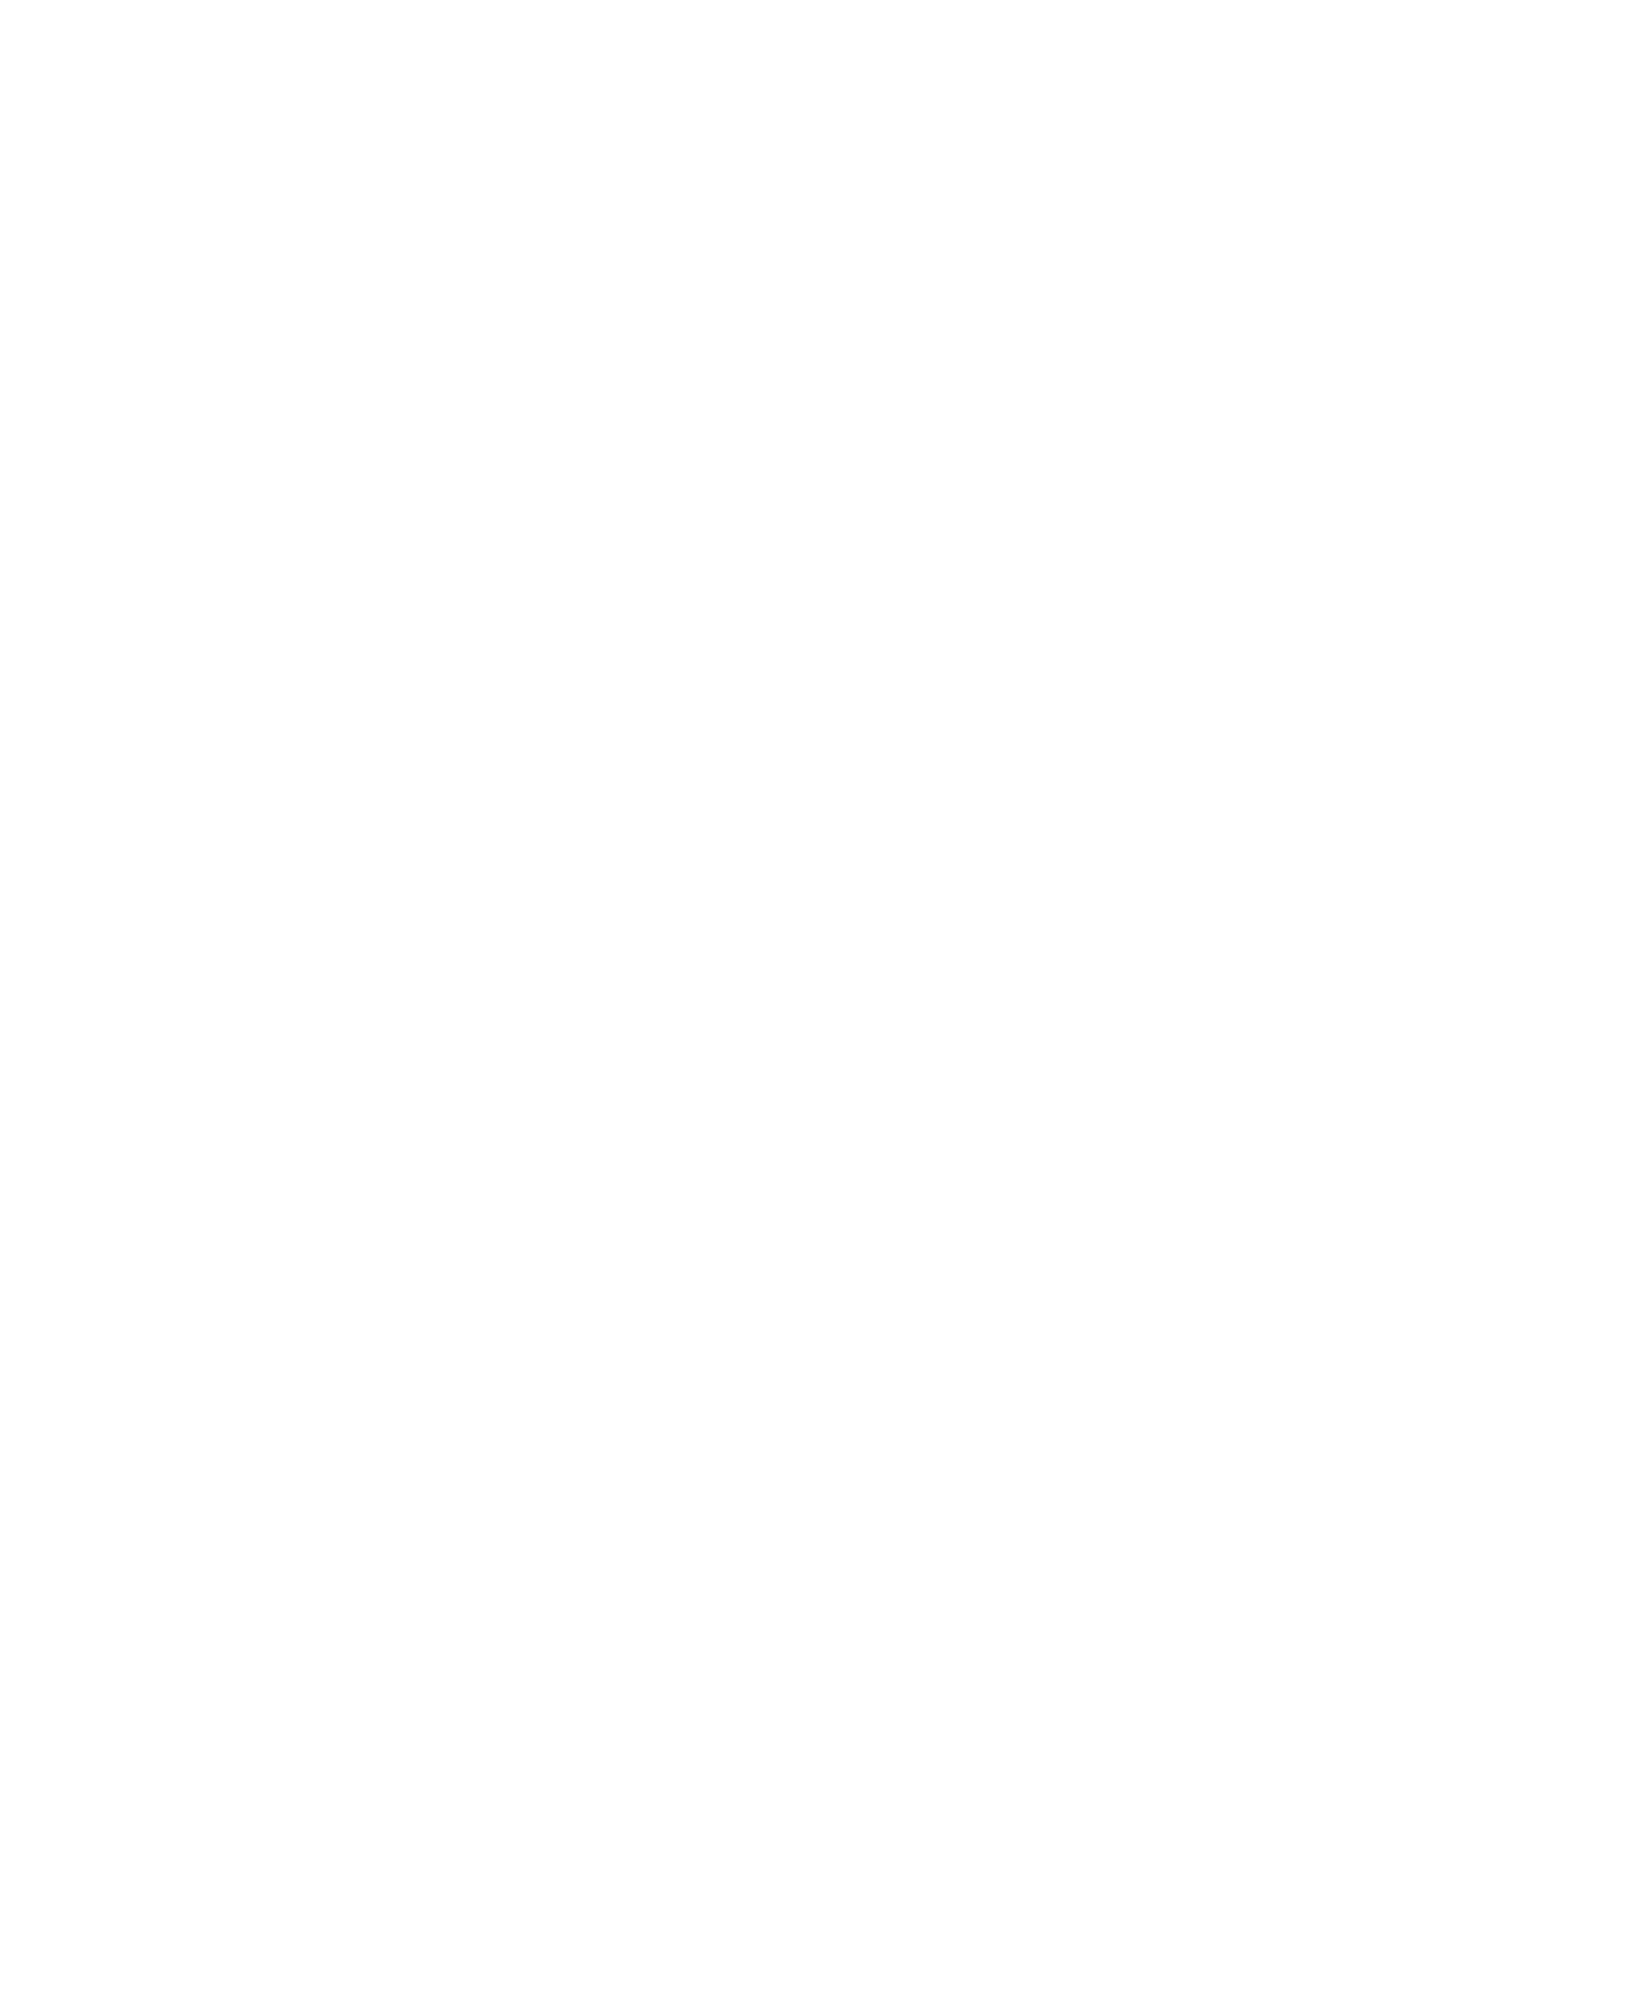 Consultants in Infectious Disease, LLC logo